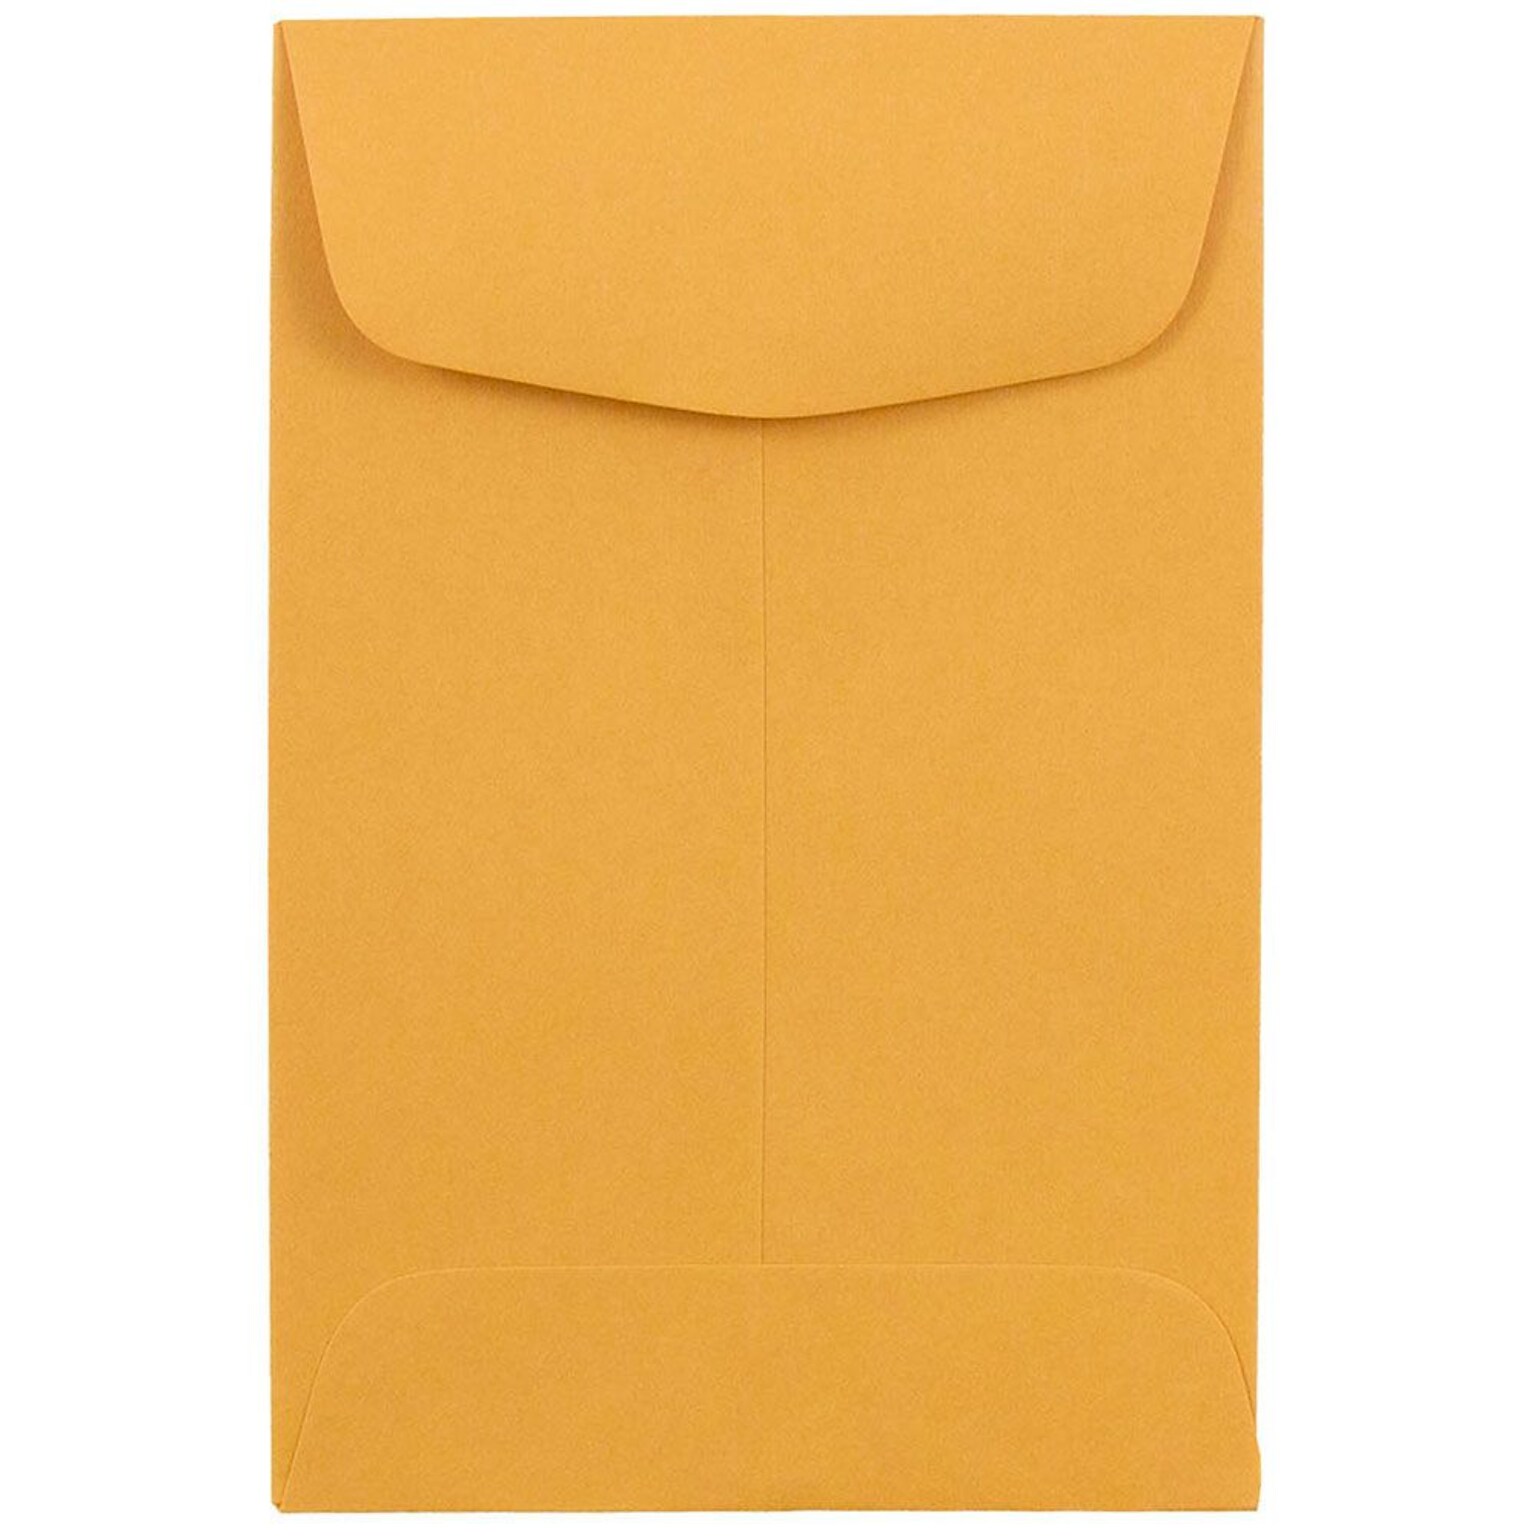 JAM Paper #4 Coin Envelope, 3 x 4 1/2, Brown Kraft, 100/Pack (356731206B)